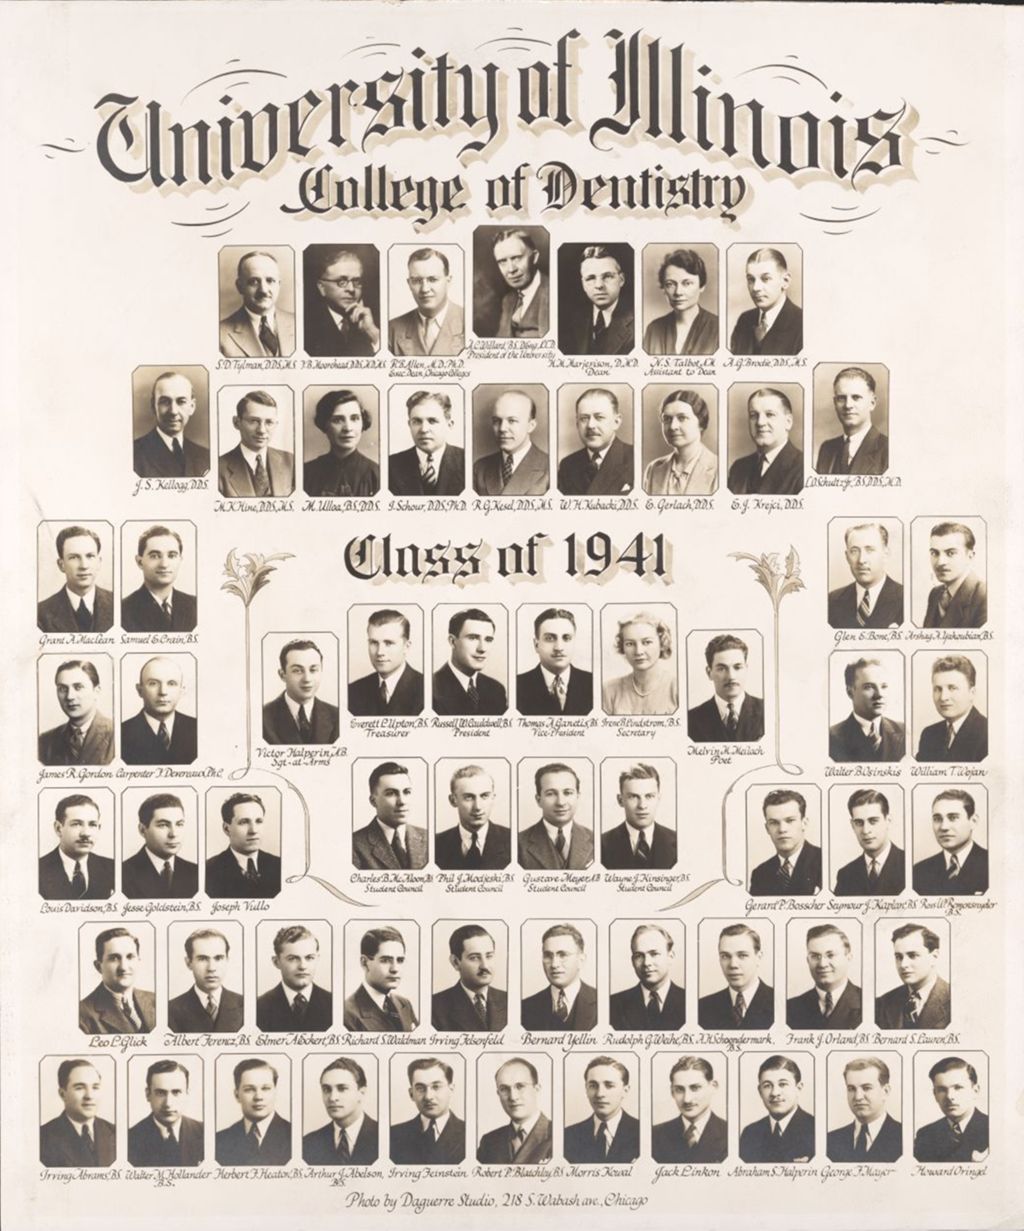 Miniature of 1941 graduating class, University of Illinois College of Dentistry